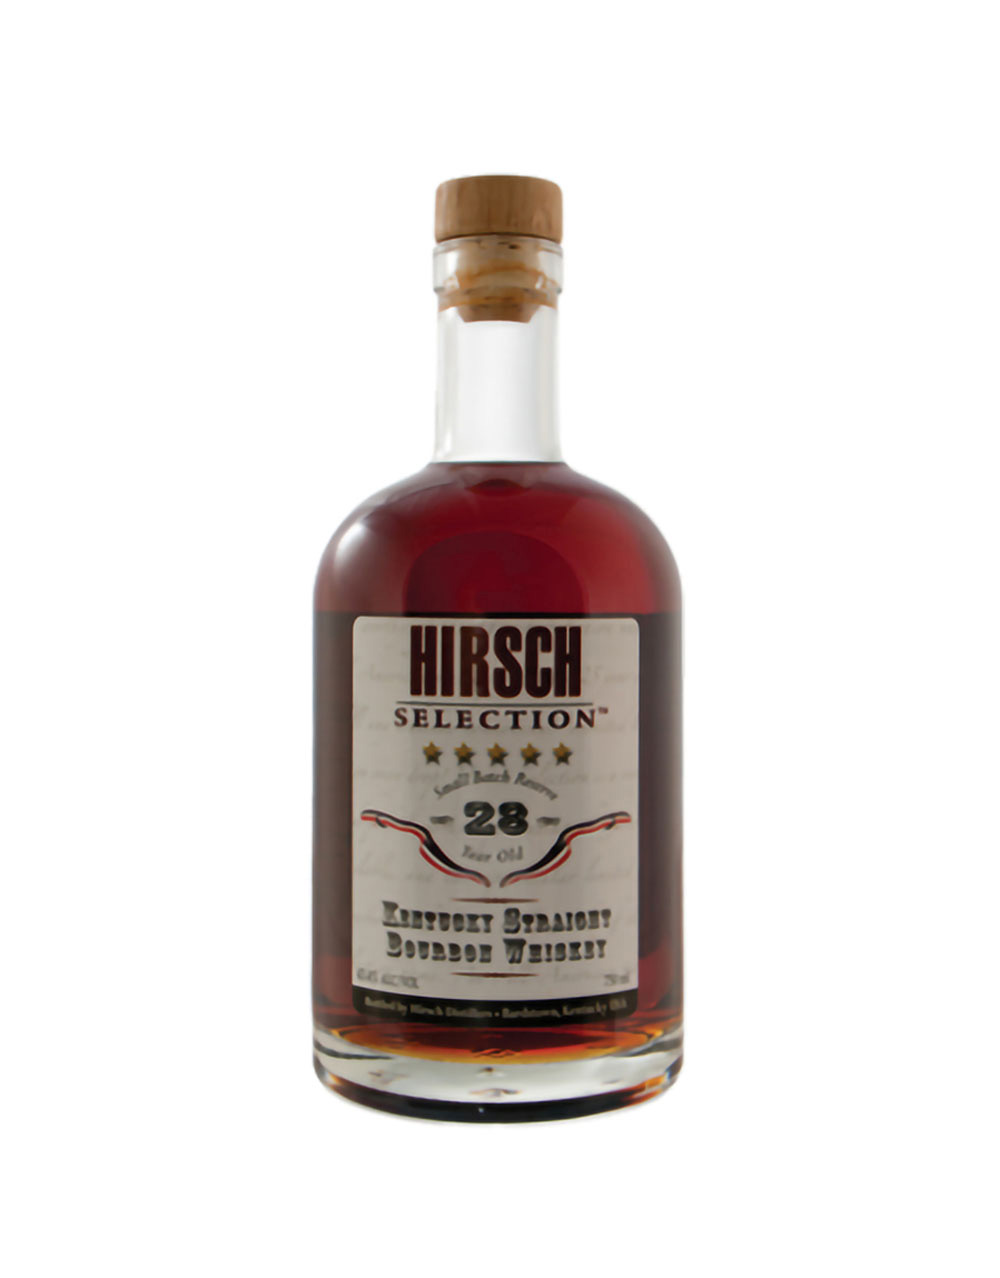 Hirsch Selection Small Batch Reserve 28 Year Old Kentucky Straight Bourbon